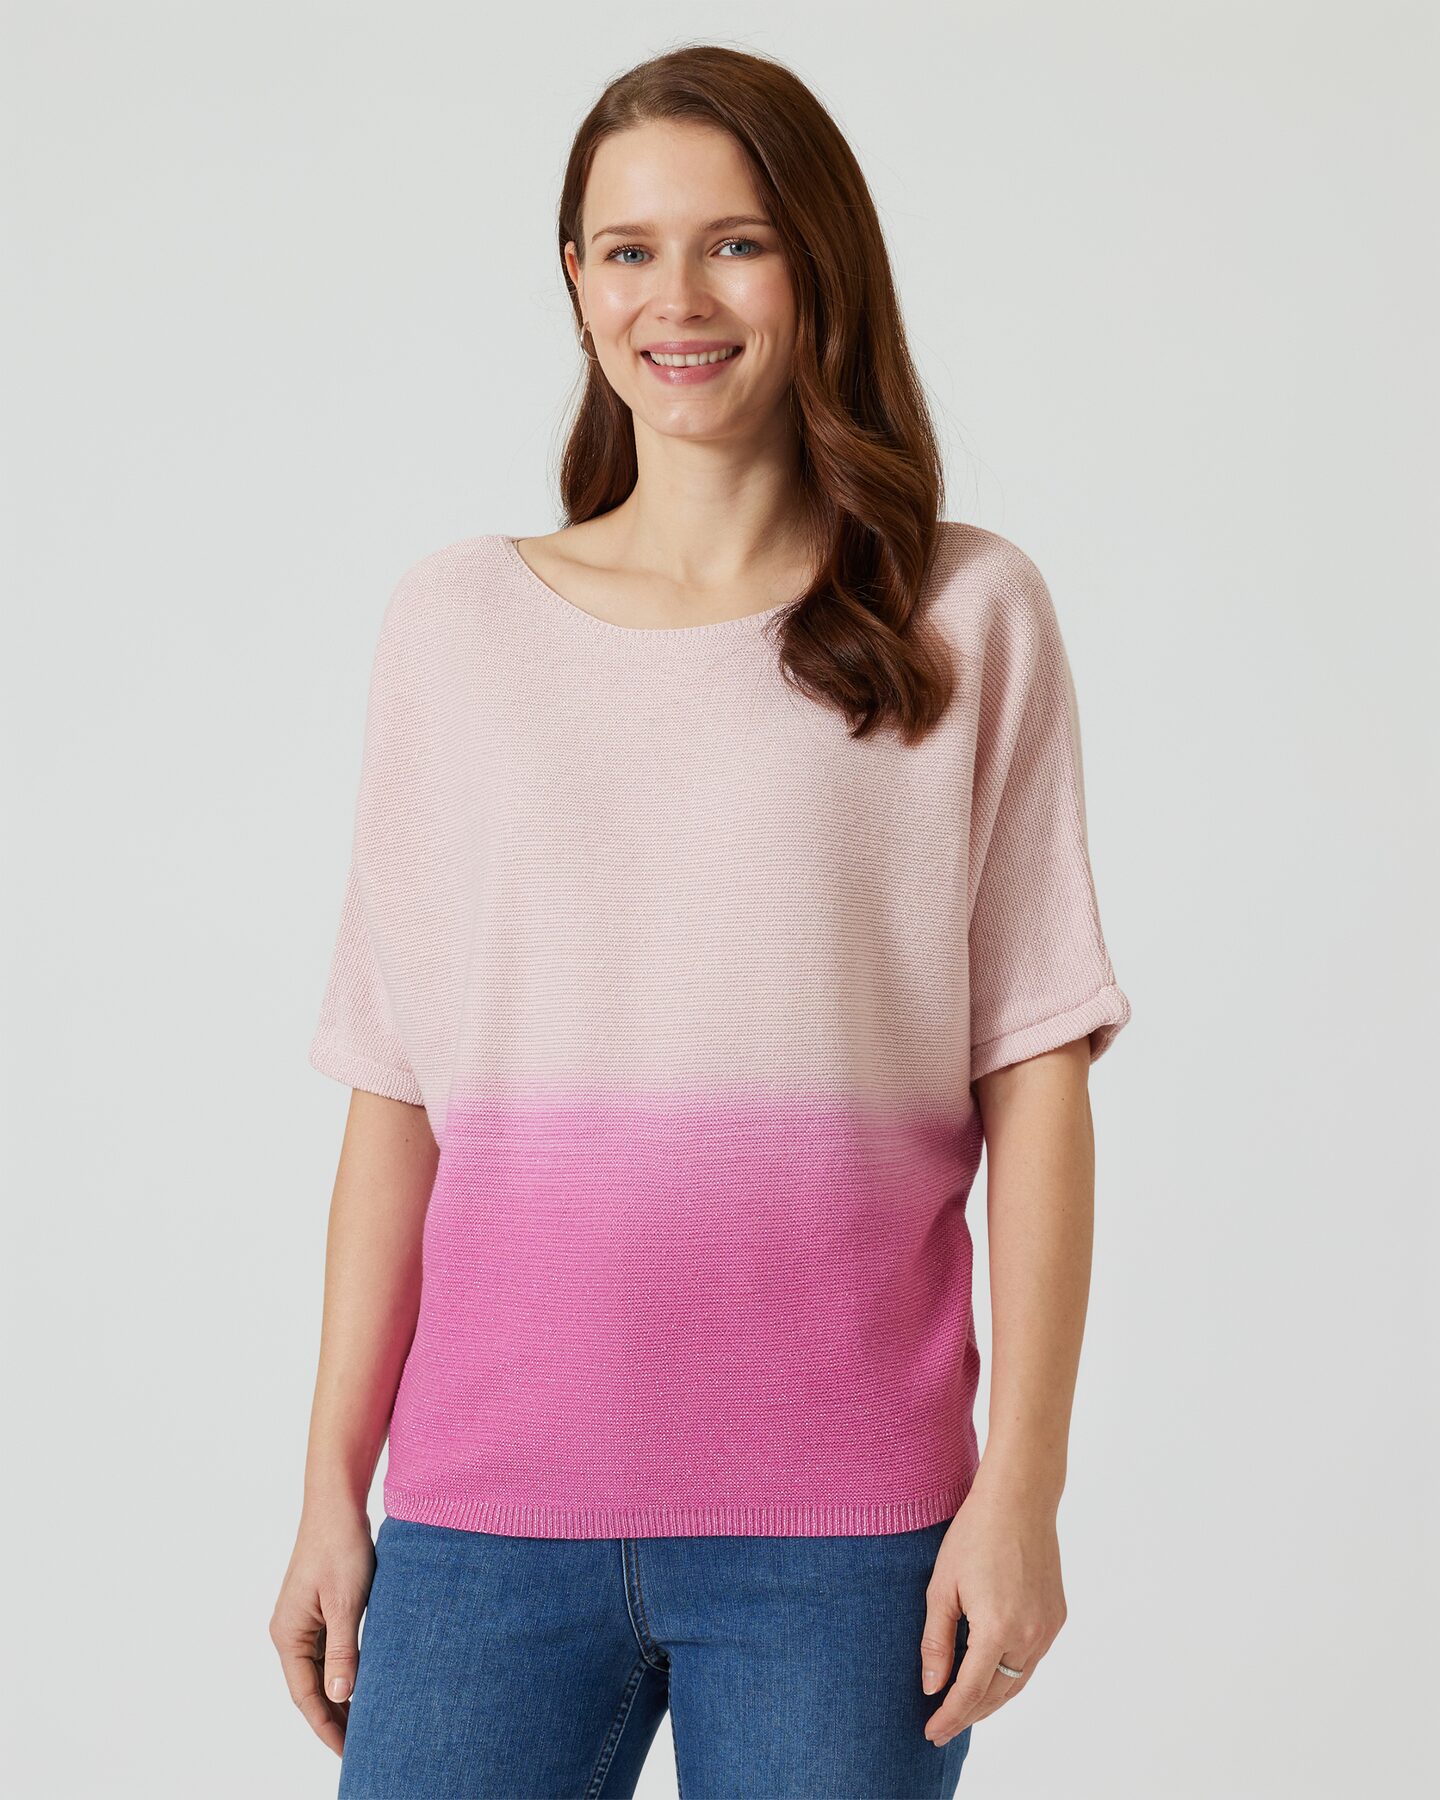 Produktabbildung für Pullover im Color-blocking-Look